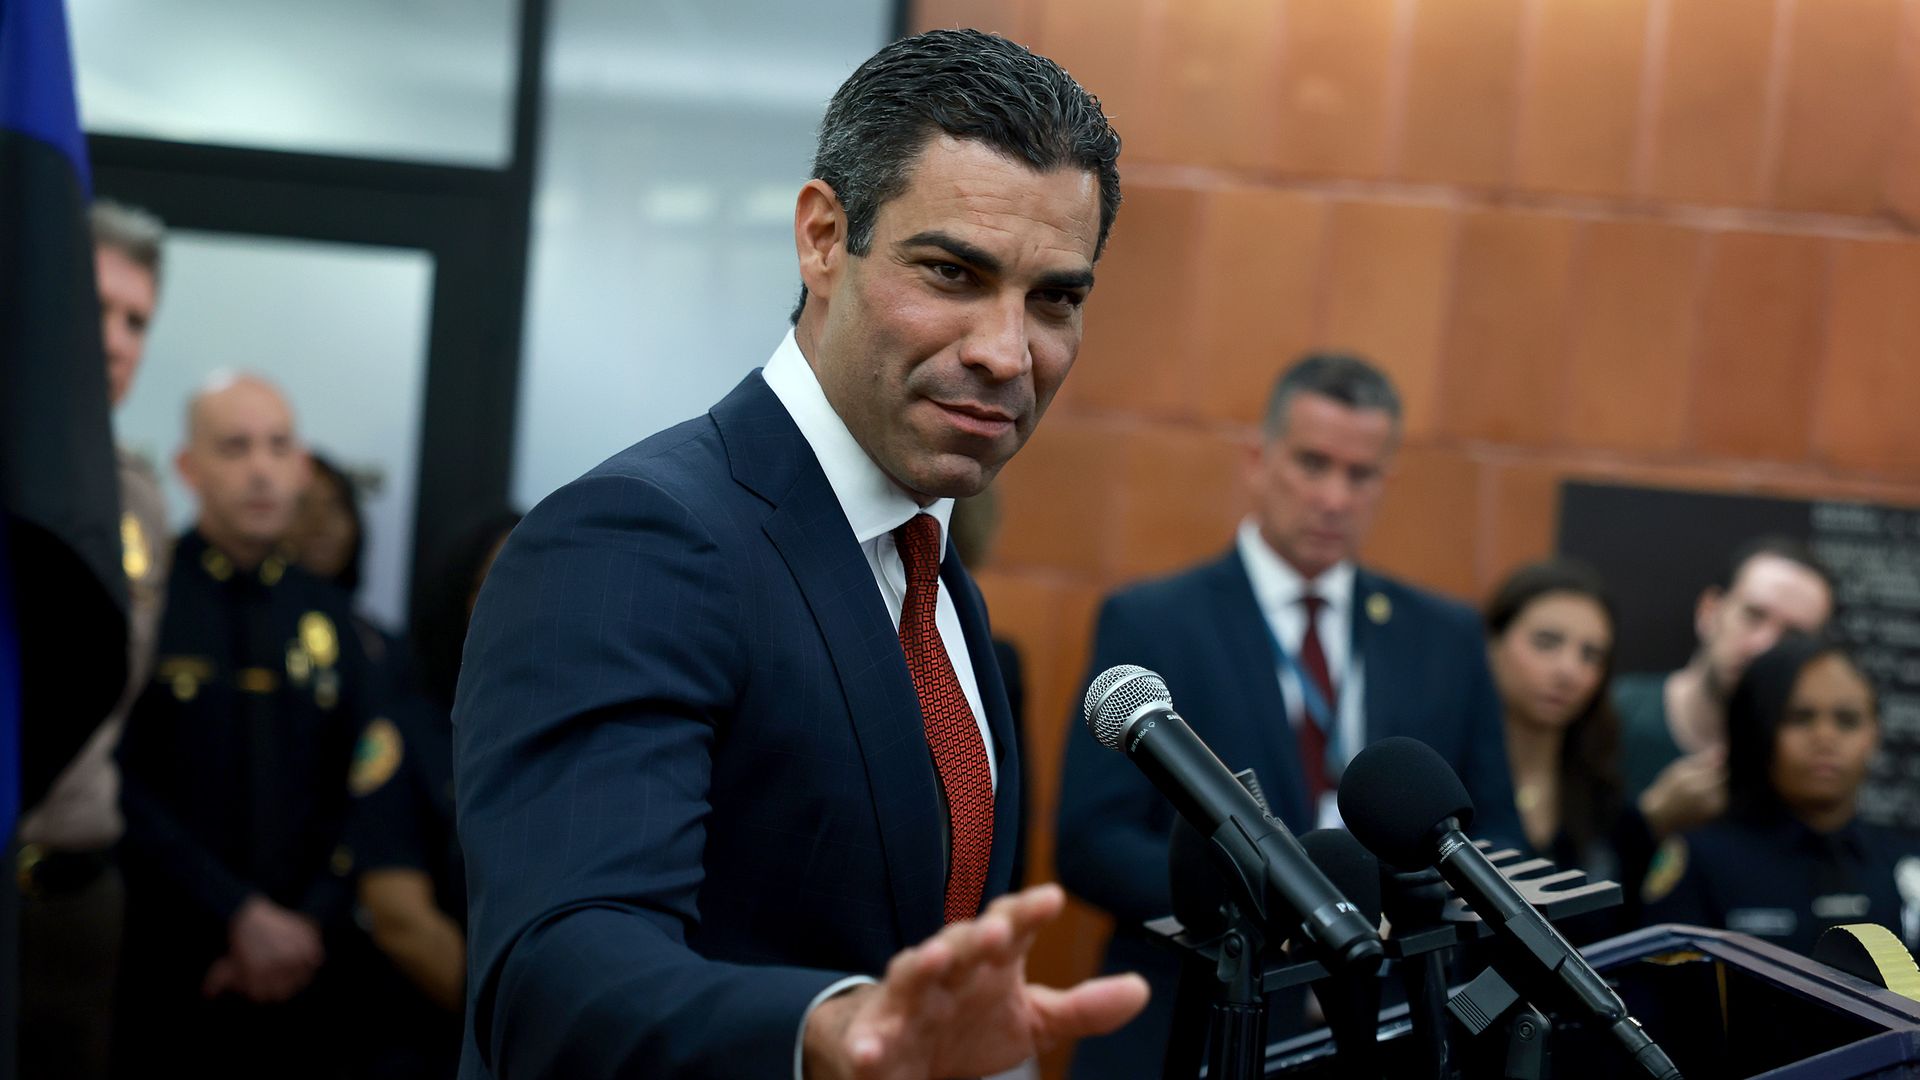 Miami mayor Francis Suarez files paperwork to run for president (axios.com)